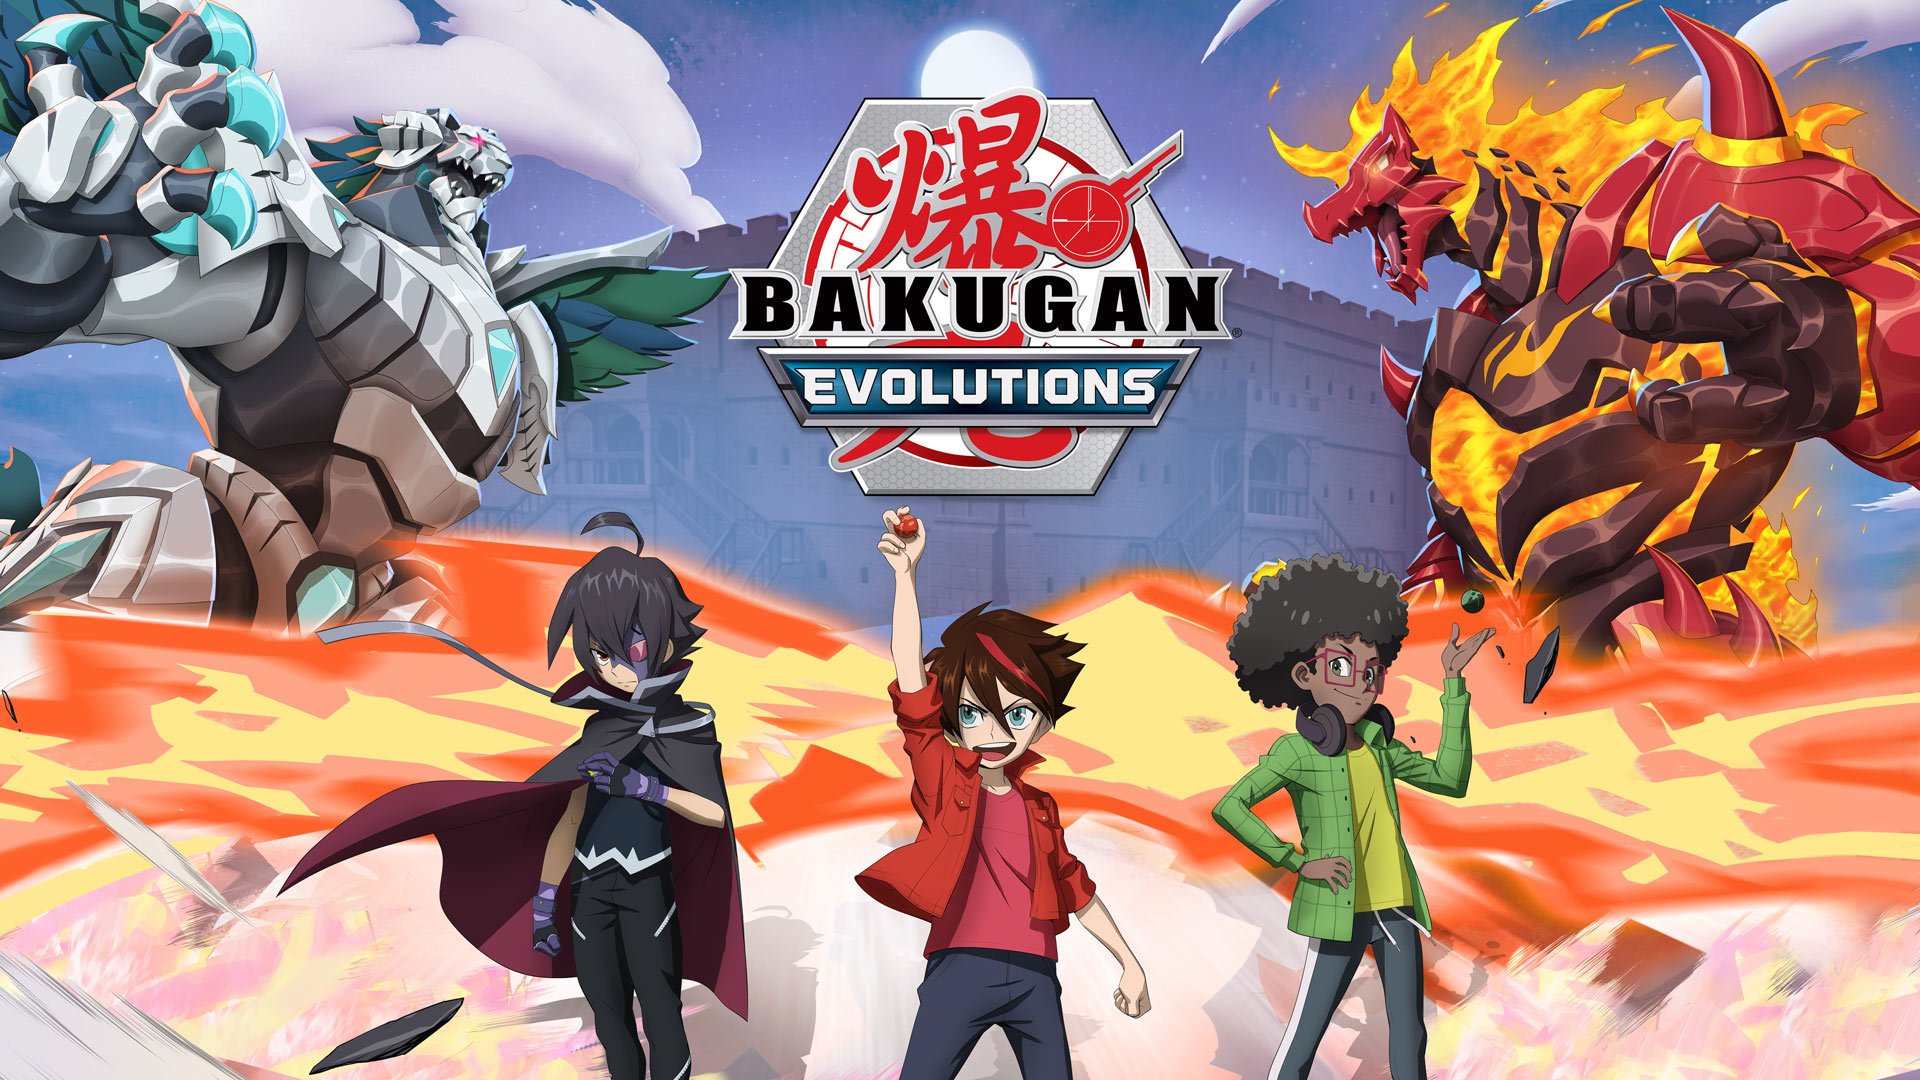 Watch Bakugan: Evolutions Season 4 Episode 21 Online - Stream Full